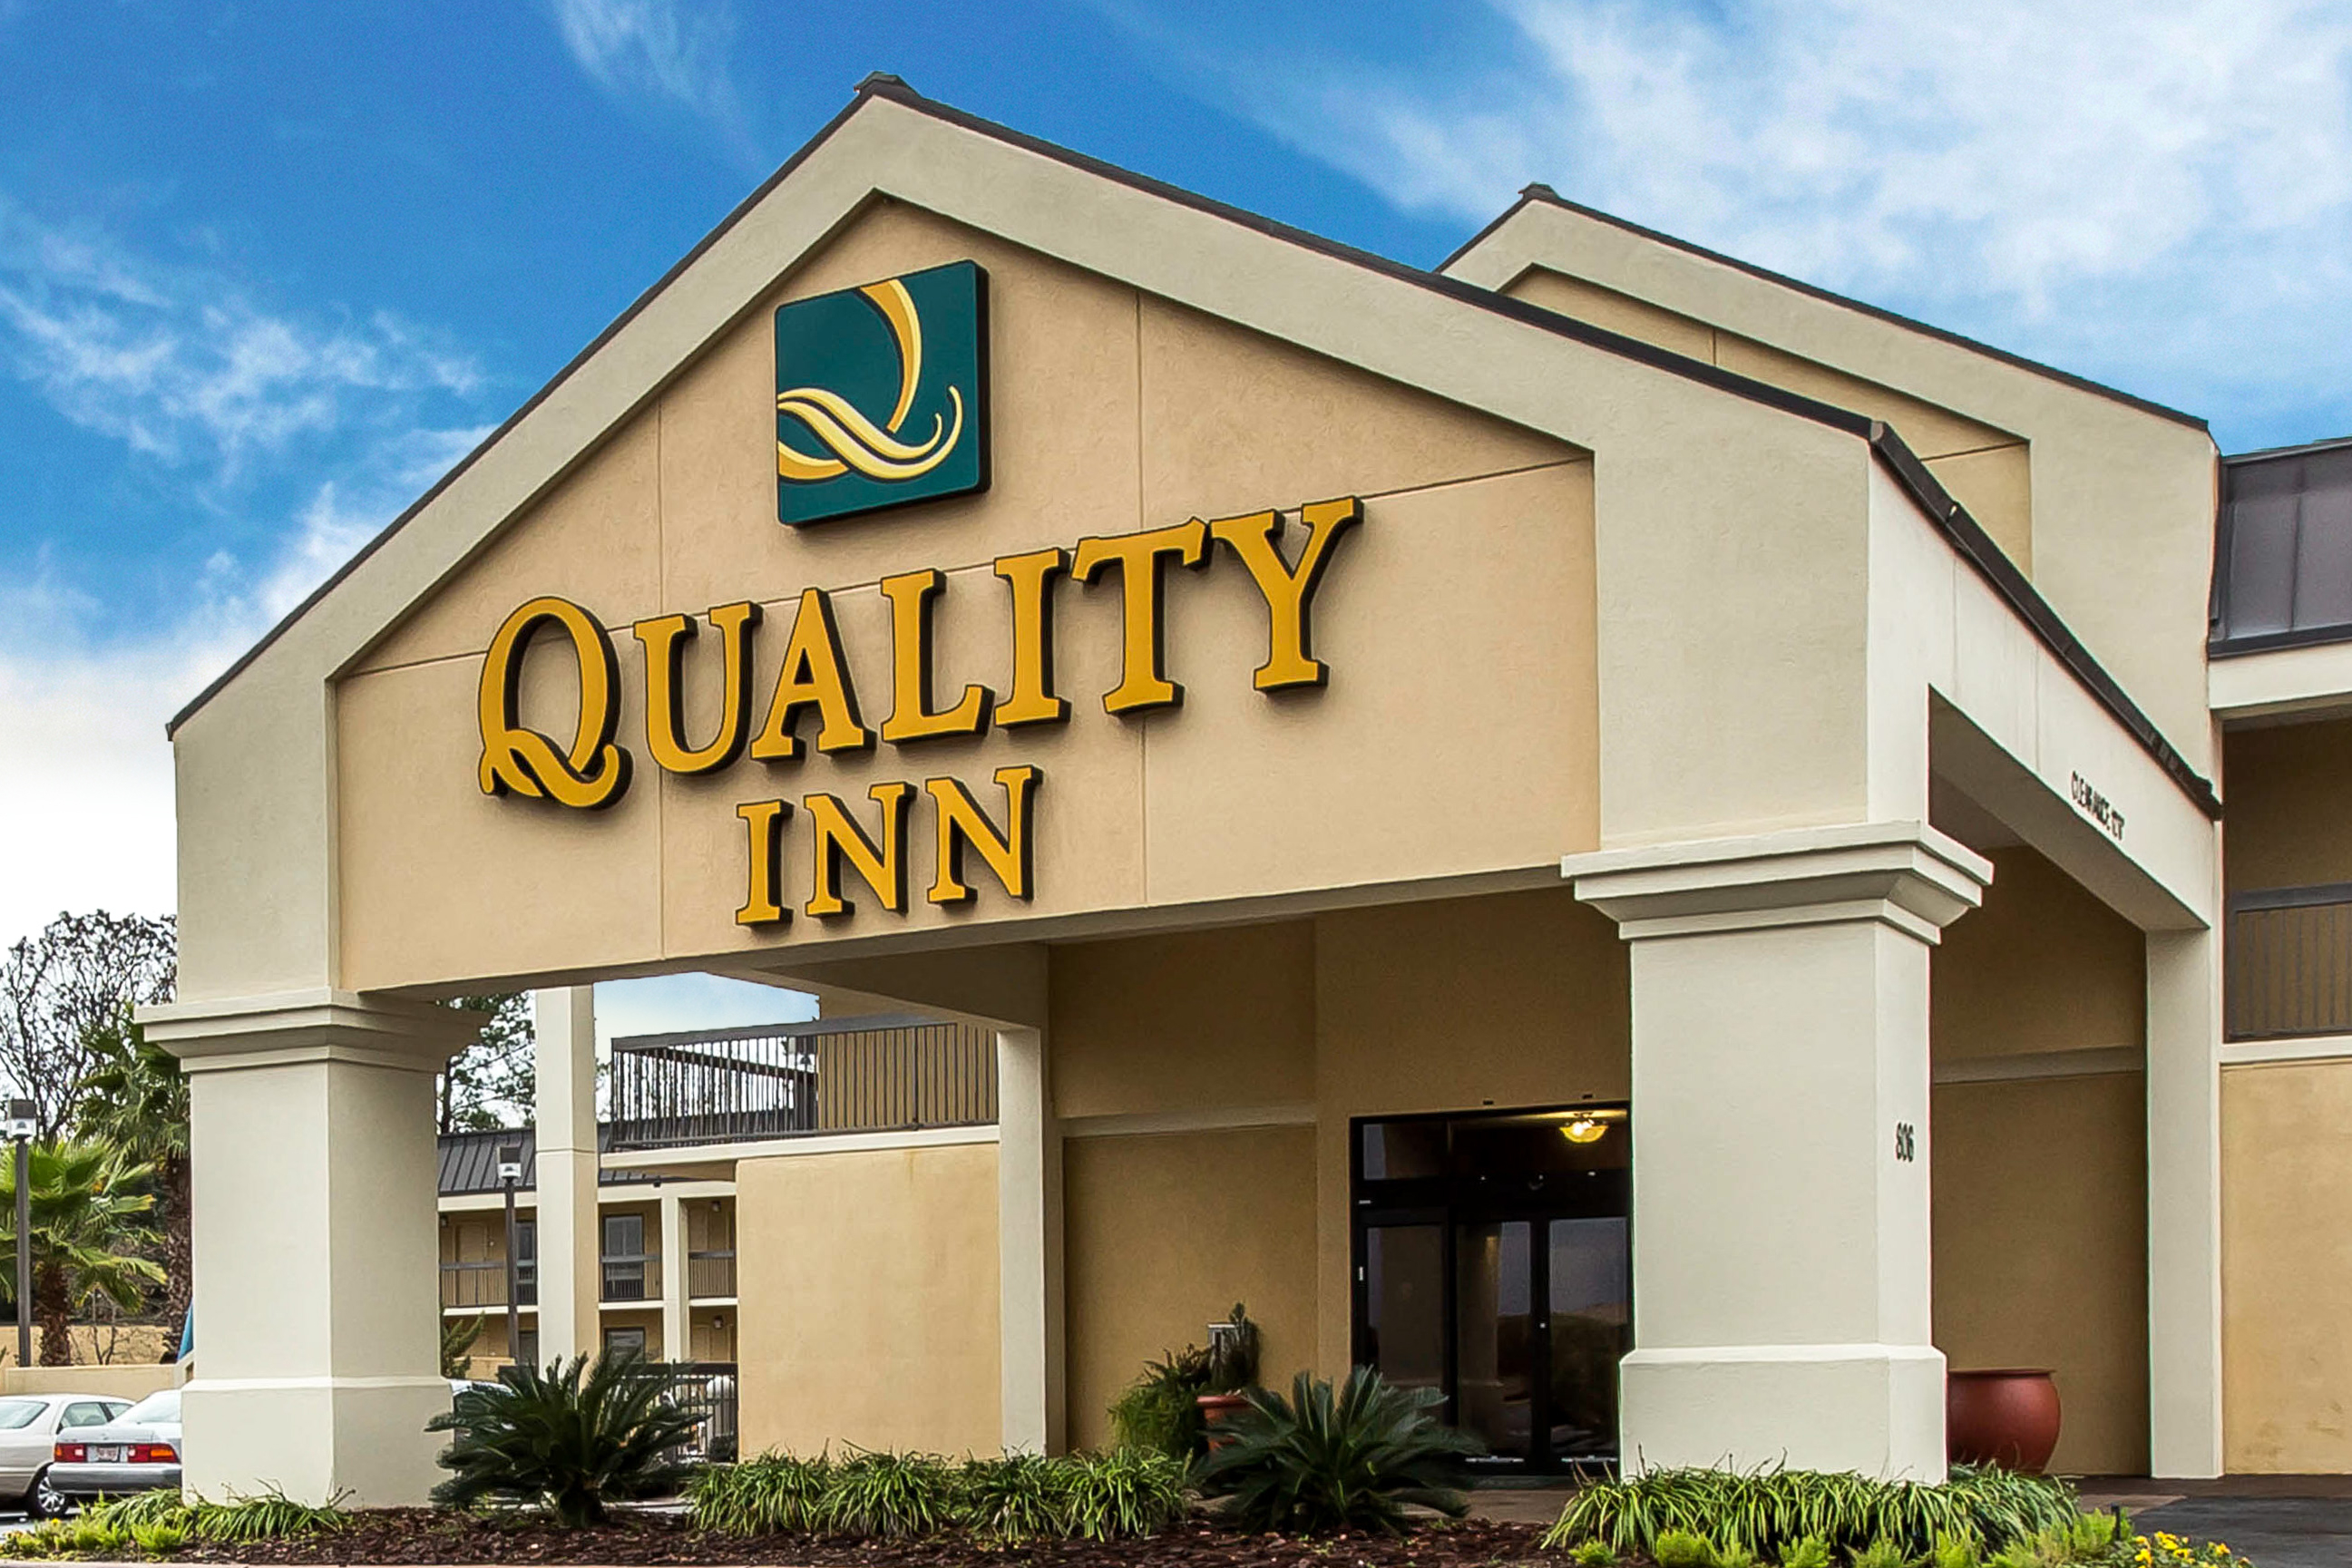 Quality Inn At Albany Mall in Albany, GA - Hotels & Motels ...